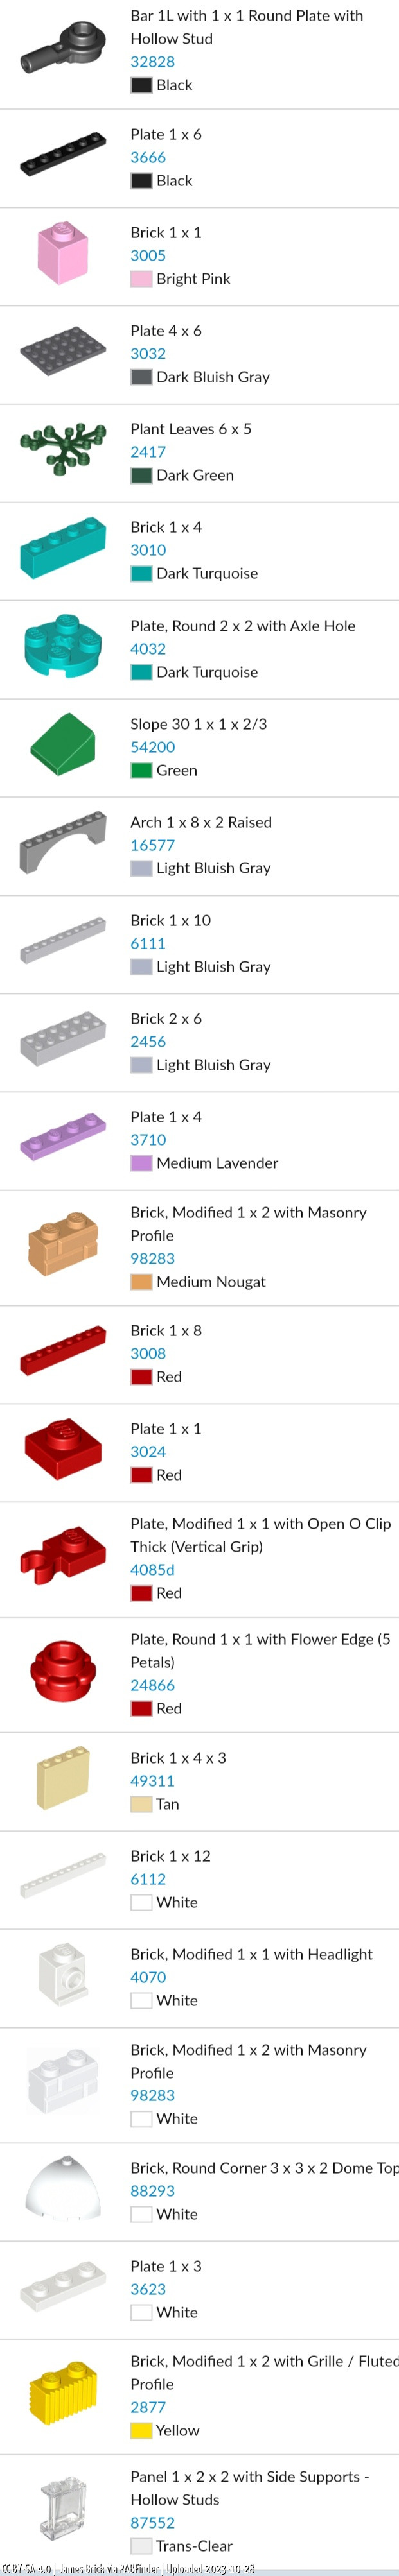 Pick a Brick Köln (James Brick, 10/28/23, 9:17:29 PM)